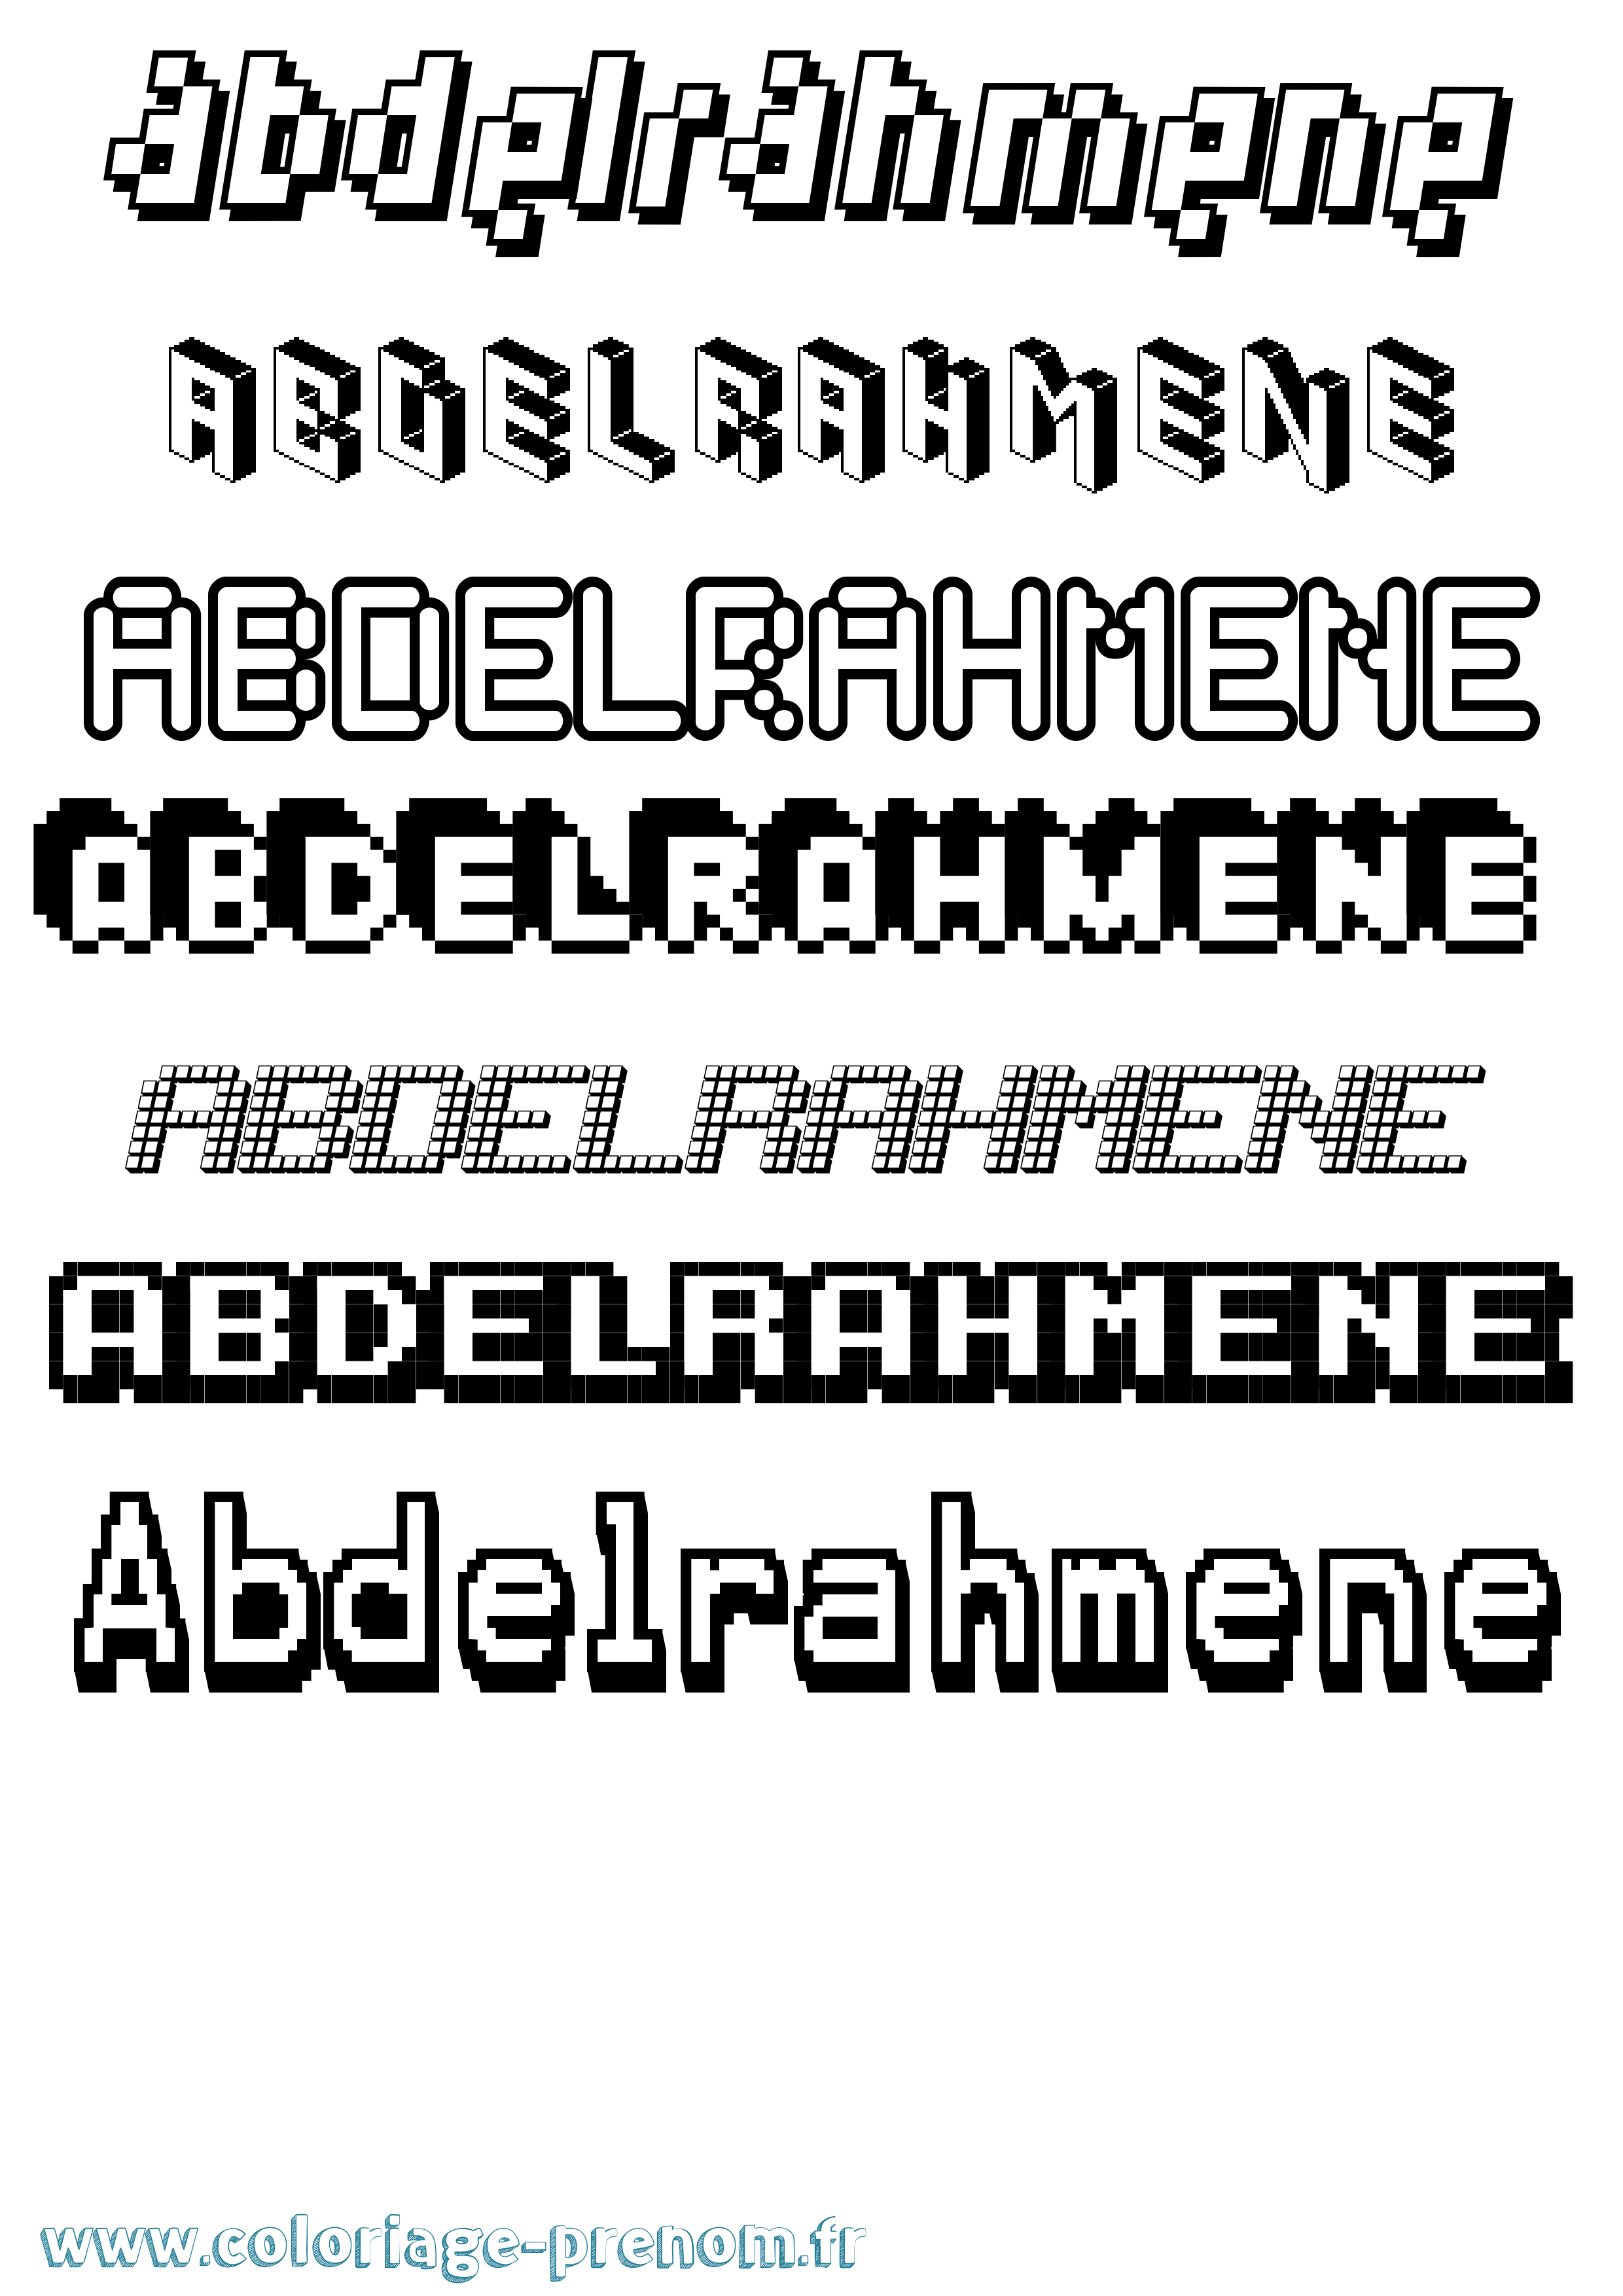 Coloriage prénom Abdelrahmene Pixel